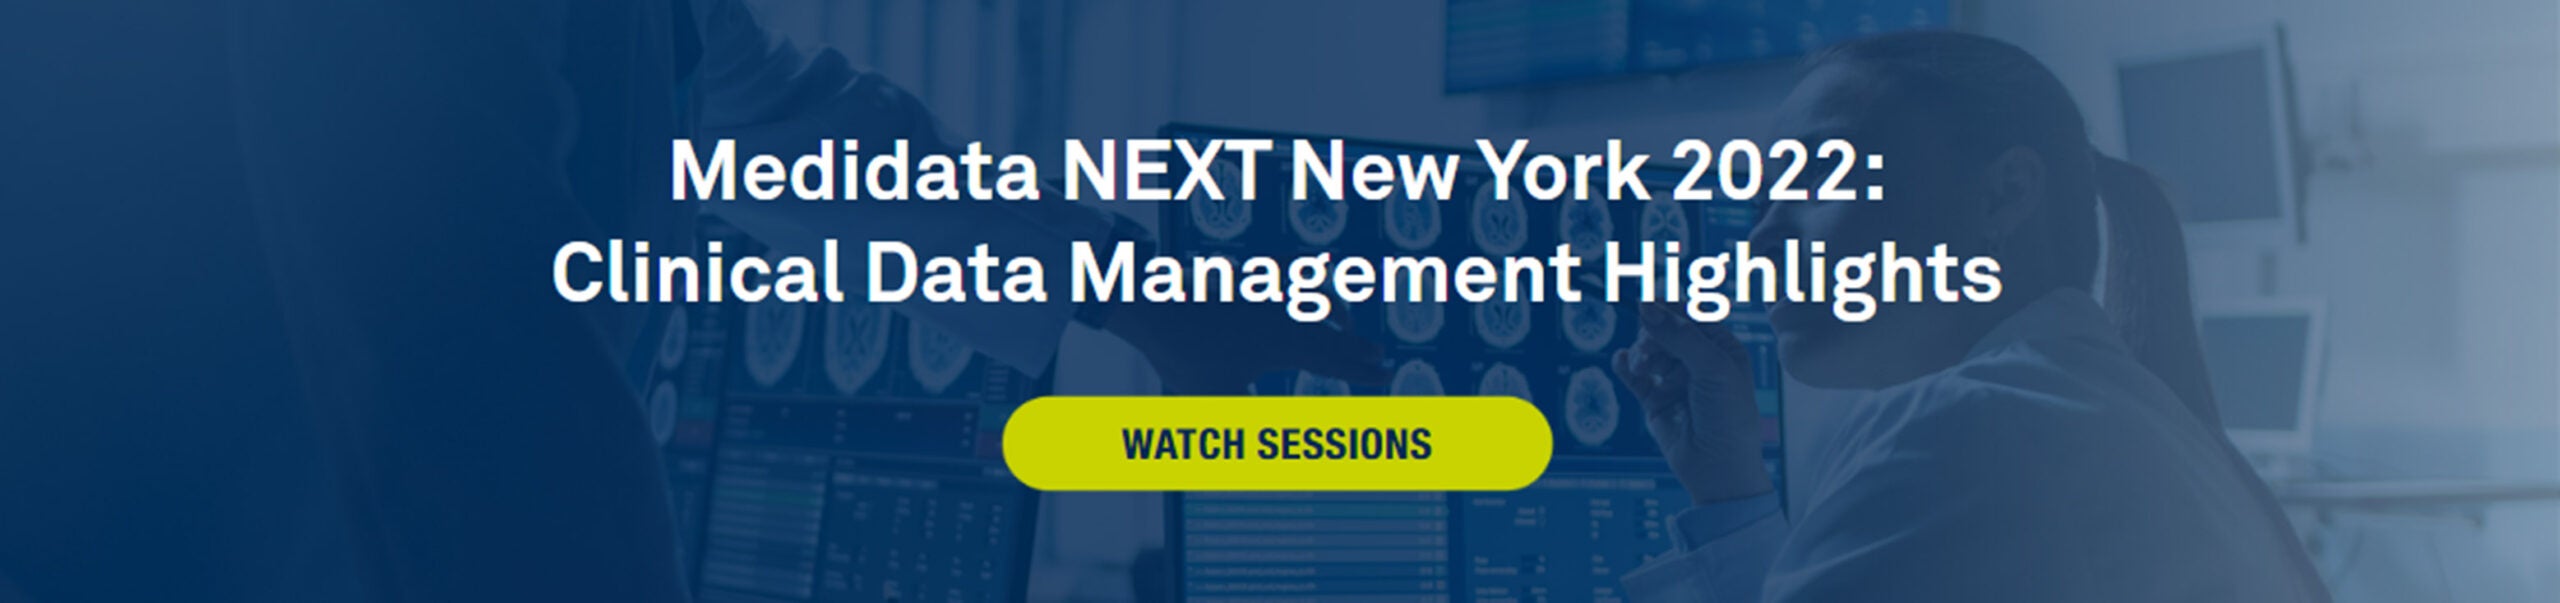 medidata-next-new-york-data-management-highlights